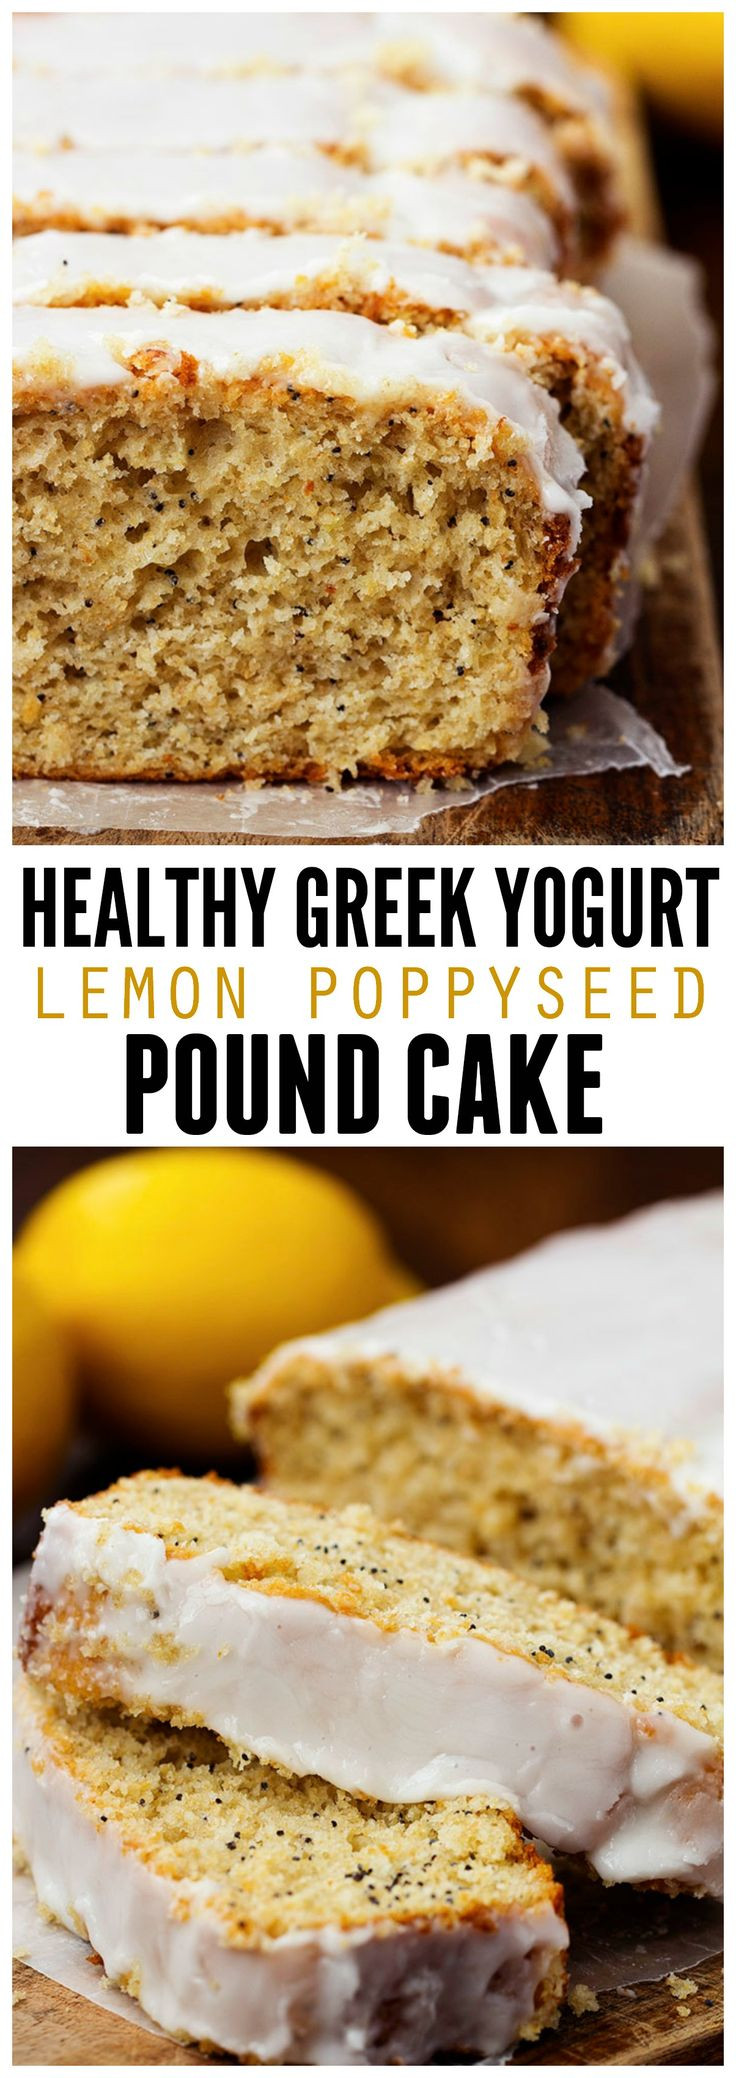 Healthy Lemon Pound Cake
 De 25 bästa idéerna om Yoghurt – bara på Pinterest